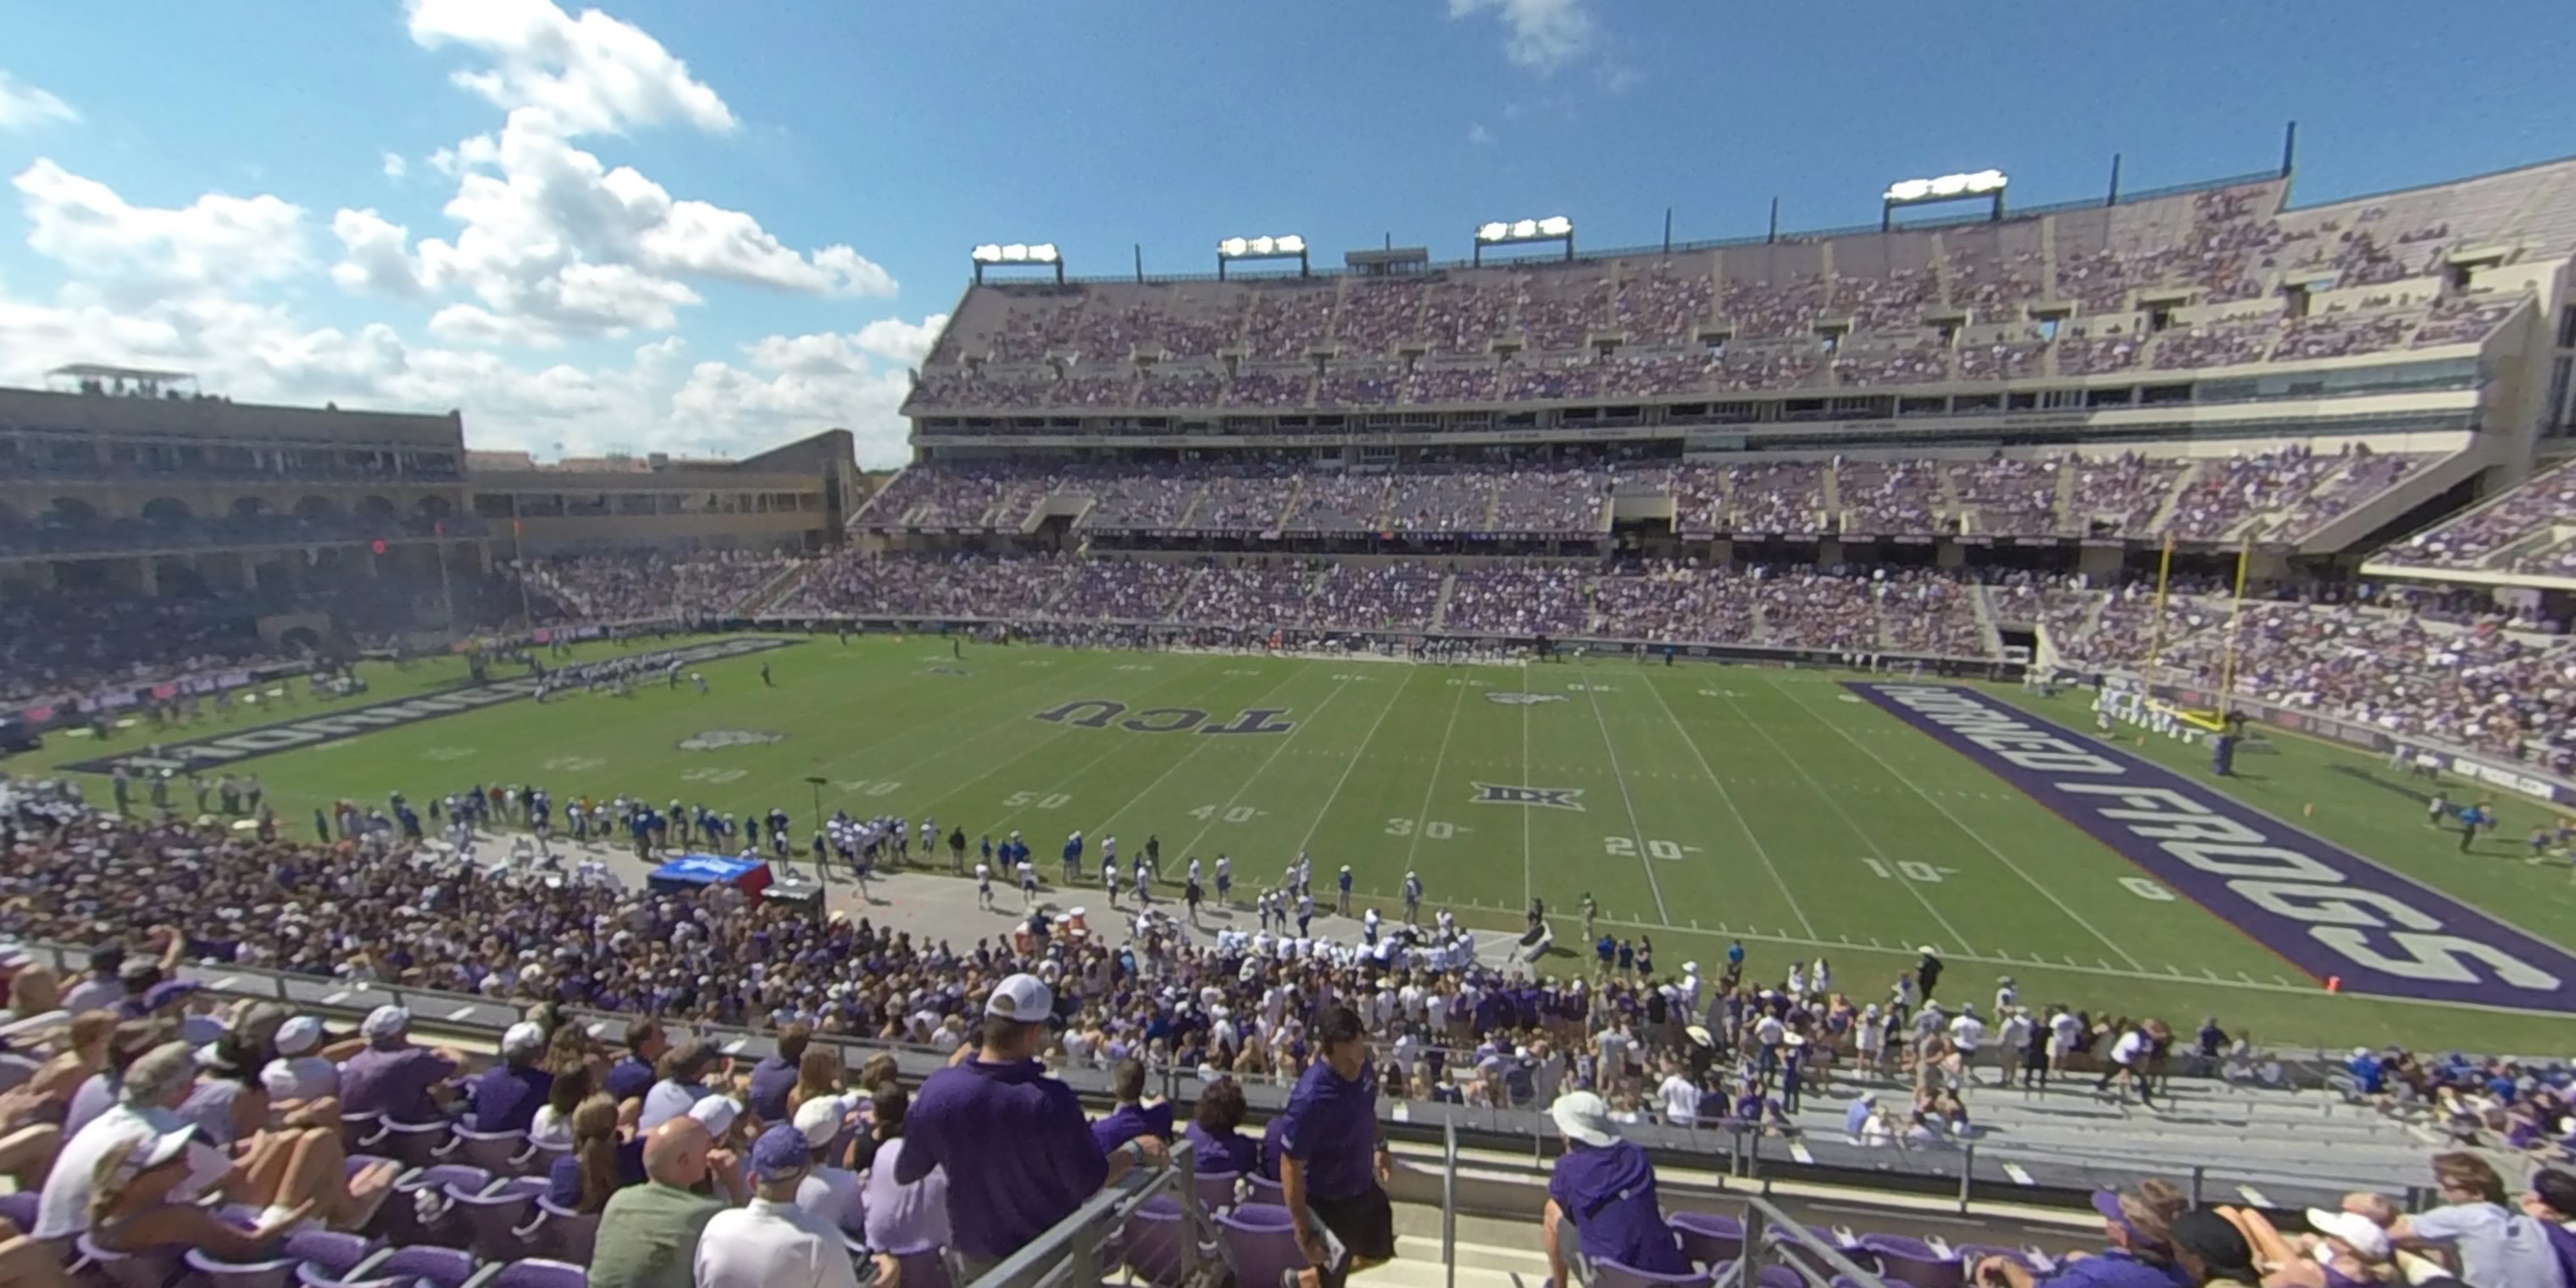 section 232 panoramic seat view  - amon carter stadium